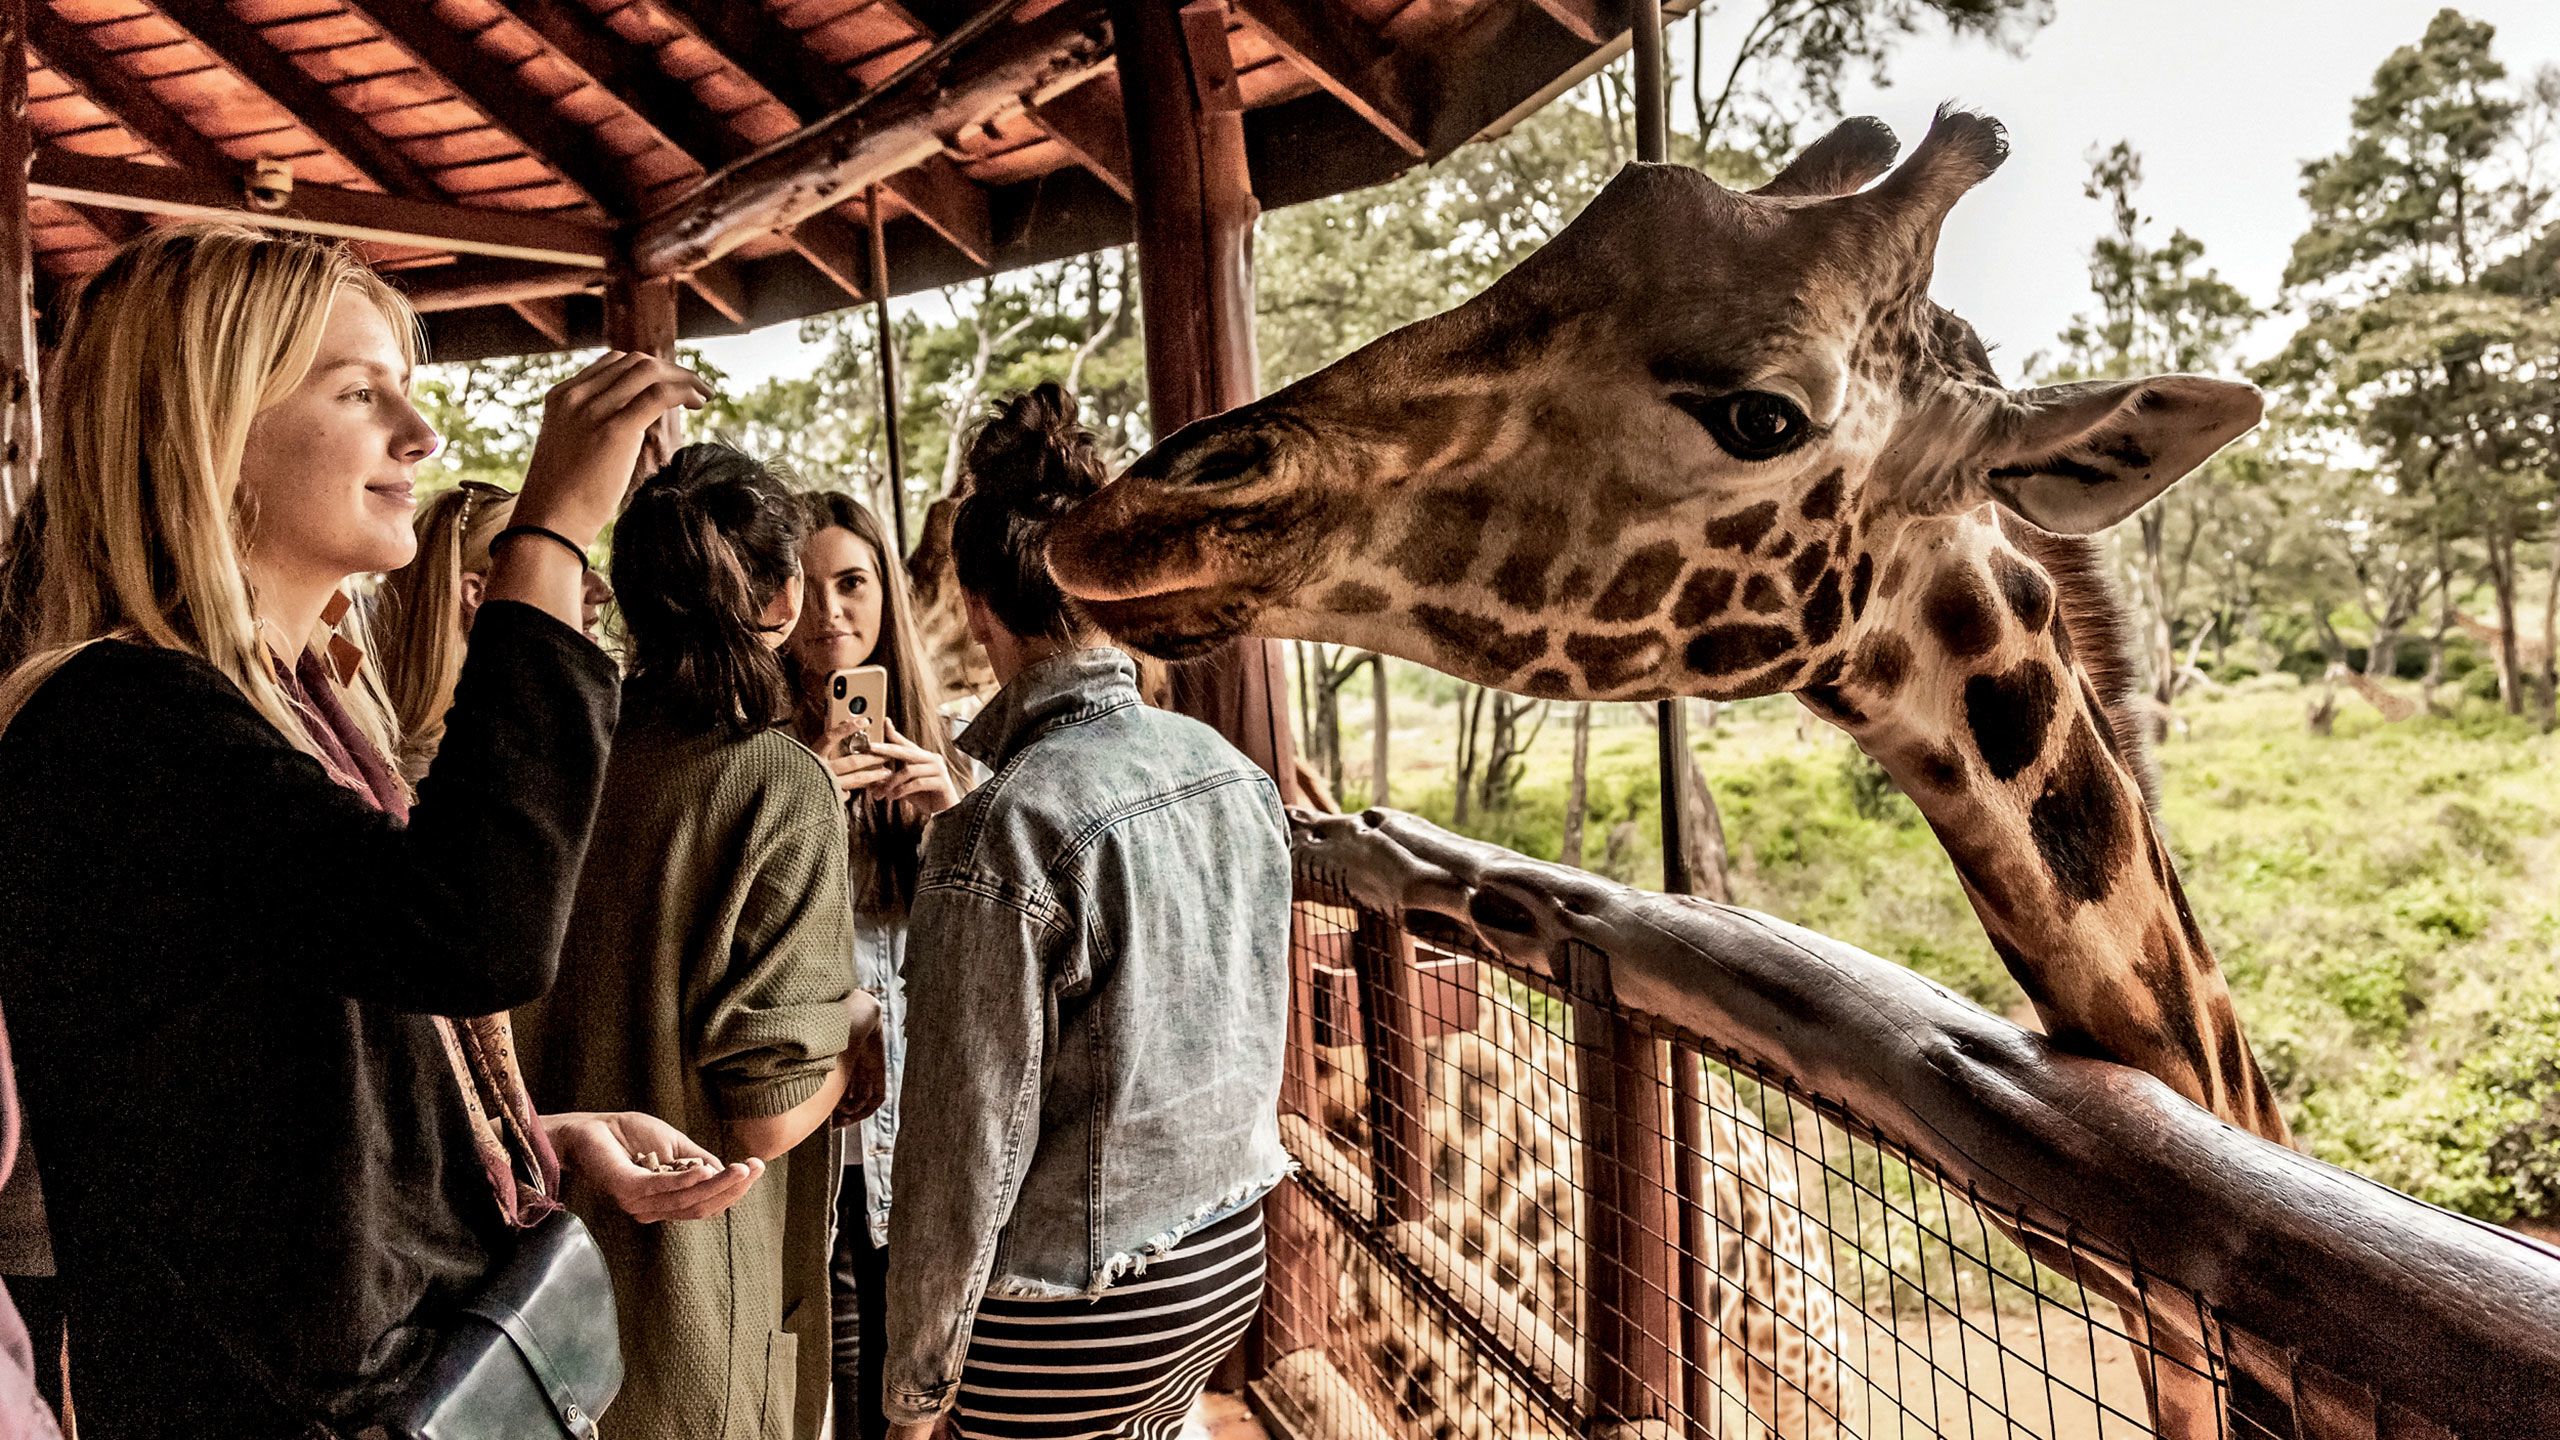 A guest feeds a giraffe at the popular Giraffe Center in Nairobi. Photo by Susan Portnoy